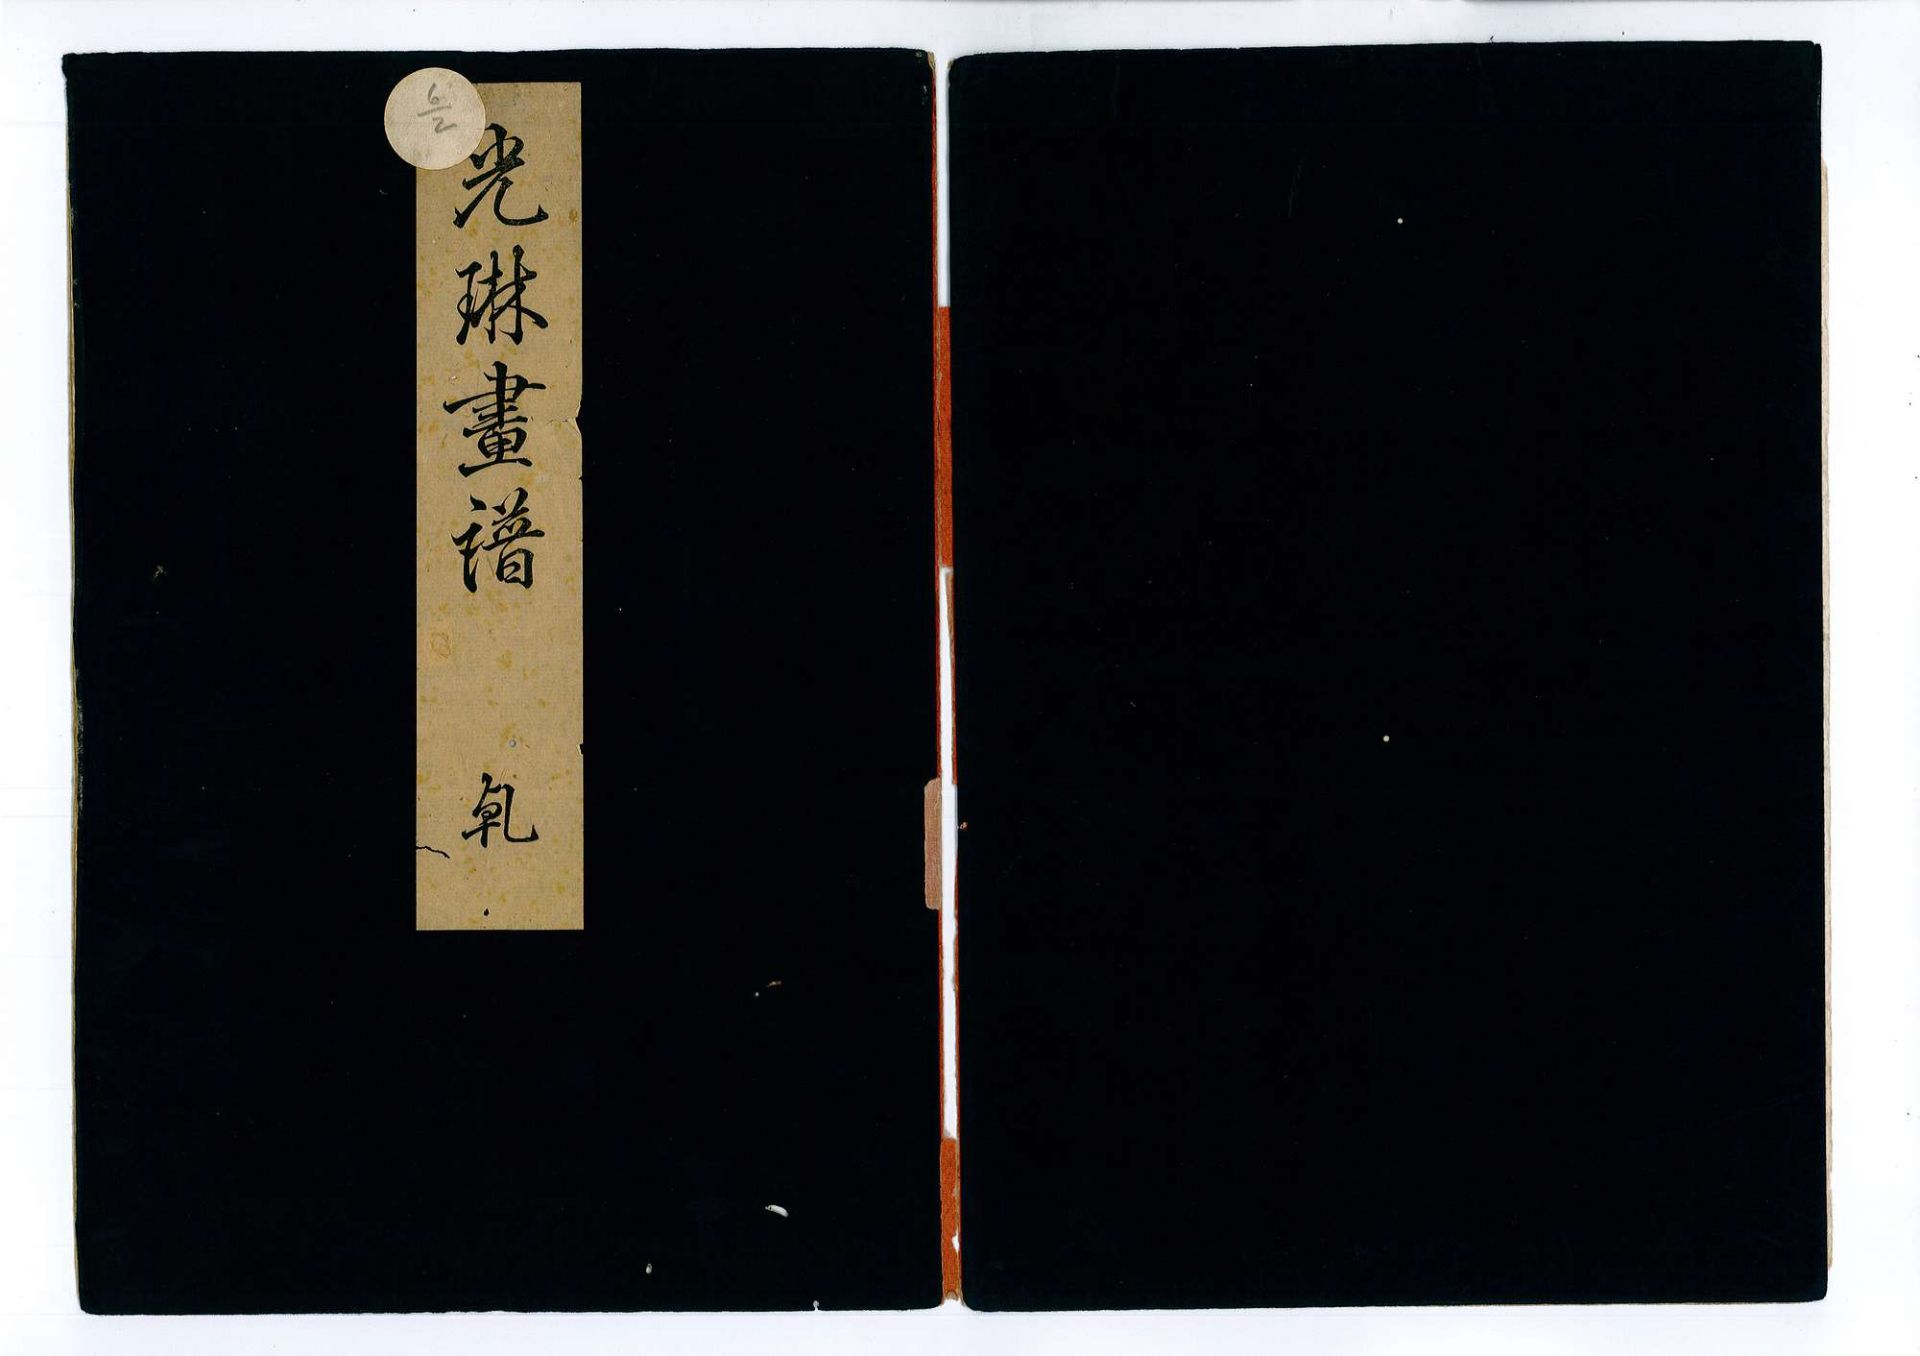 Ogata K?rin (Kyoto 1658 - 1716) attribuito